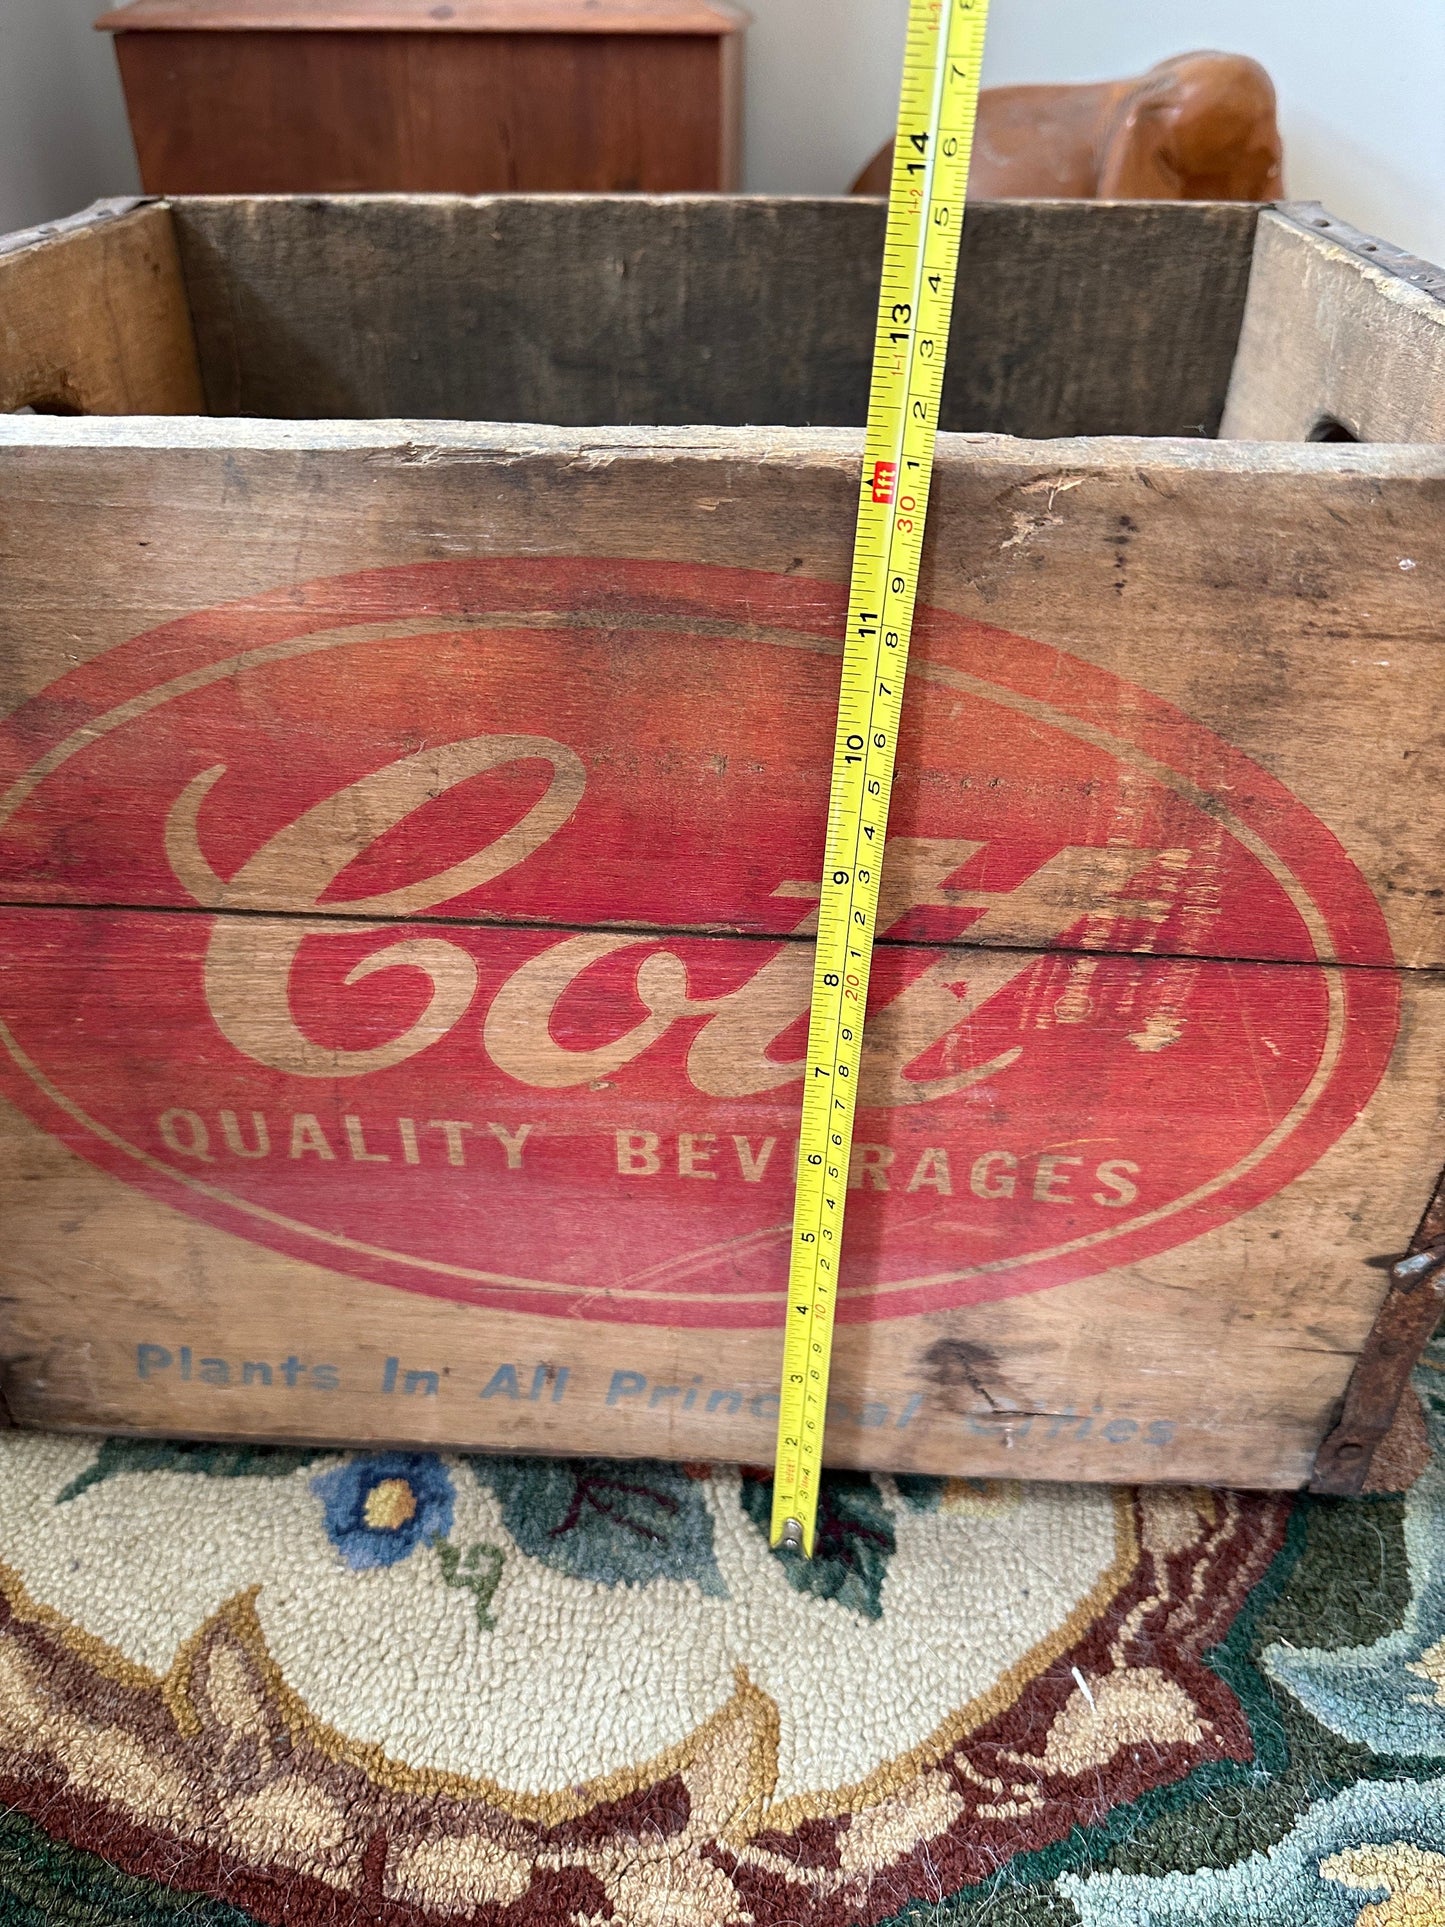 Cott, Cott Beverage Crate, Vintage Crate, Vintage Cott Beverage Crate, Vintage Wooden Crate, 1962, Pawtucket, Rhode Island, Beverage Crate